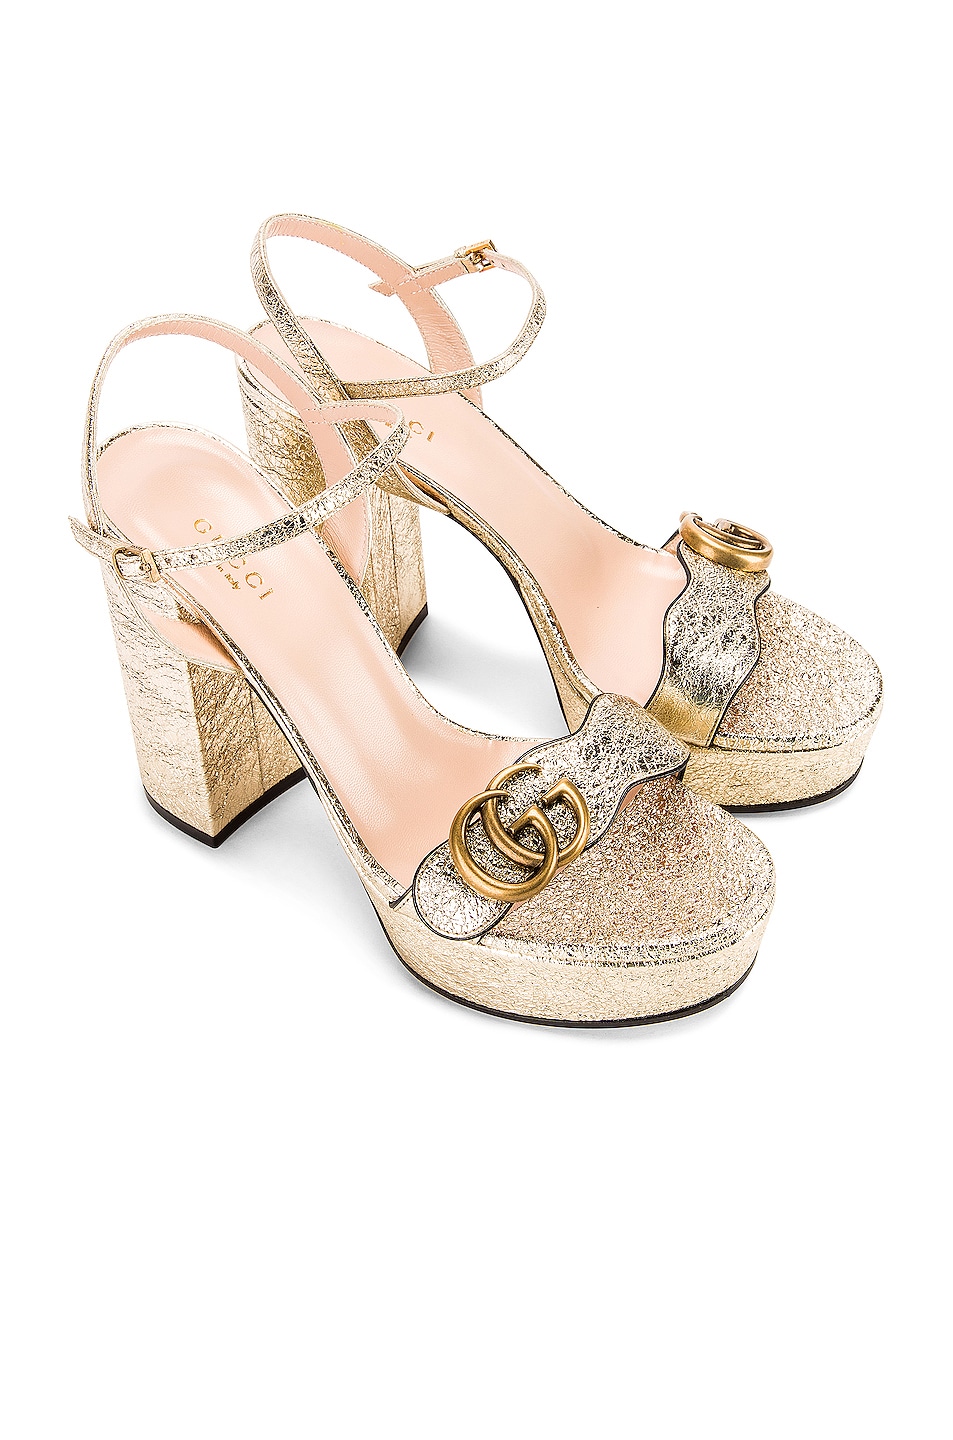 Gucci Double G Platform Sandals in Platino | FWRD